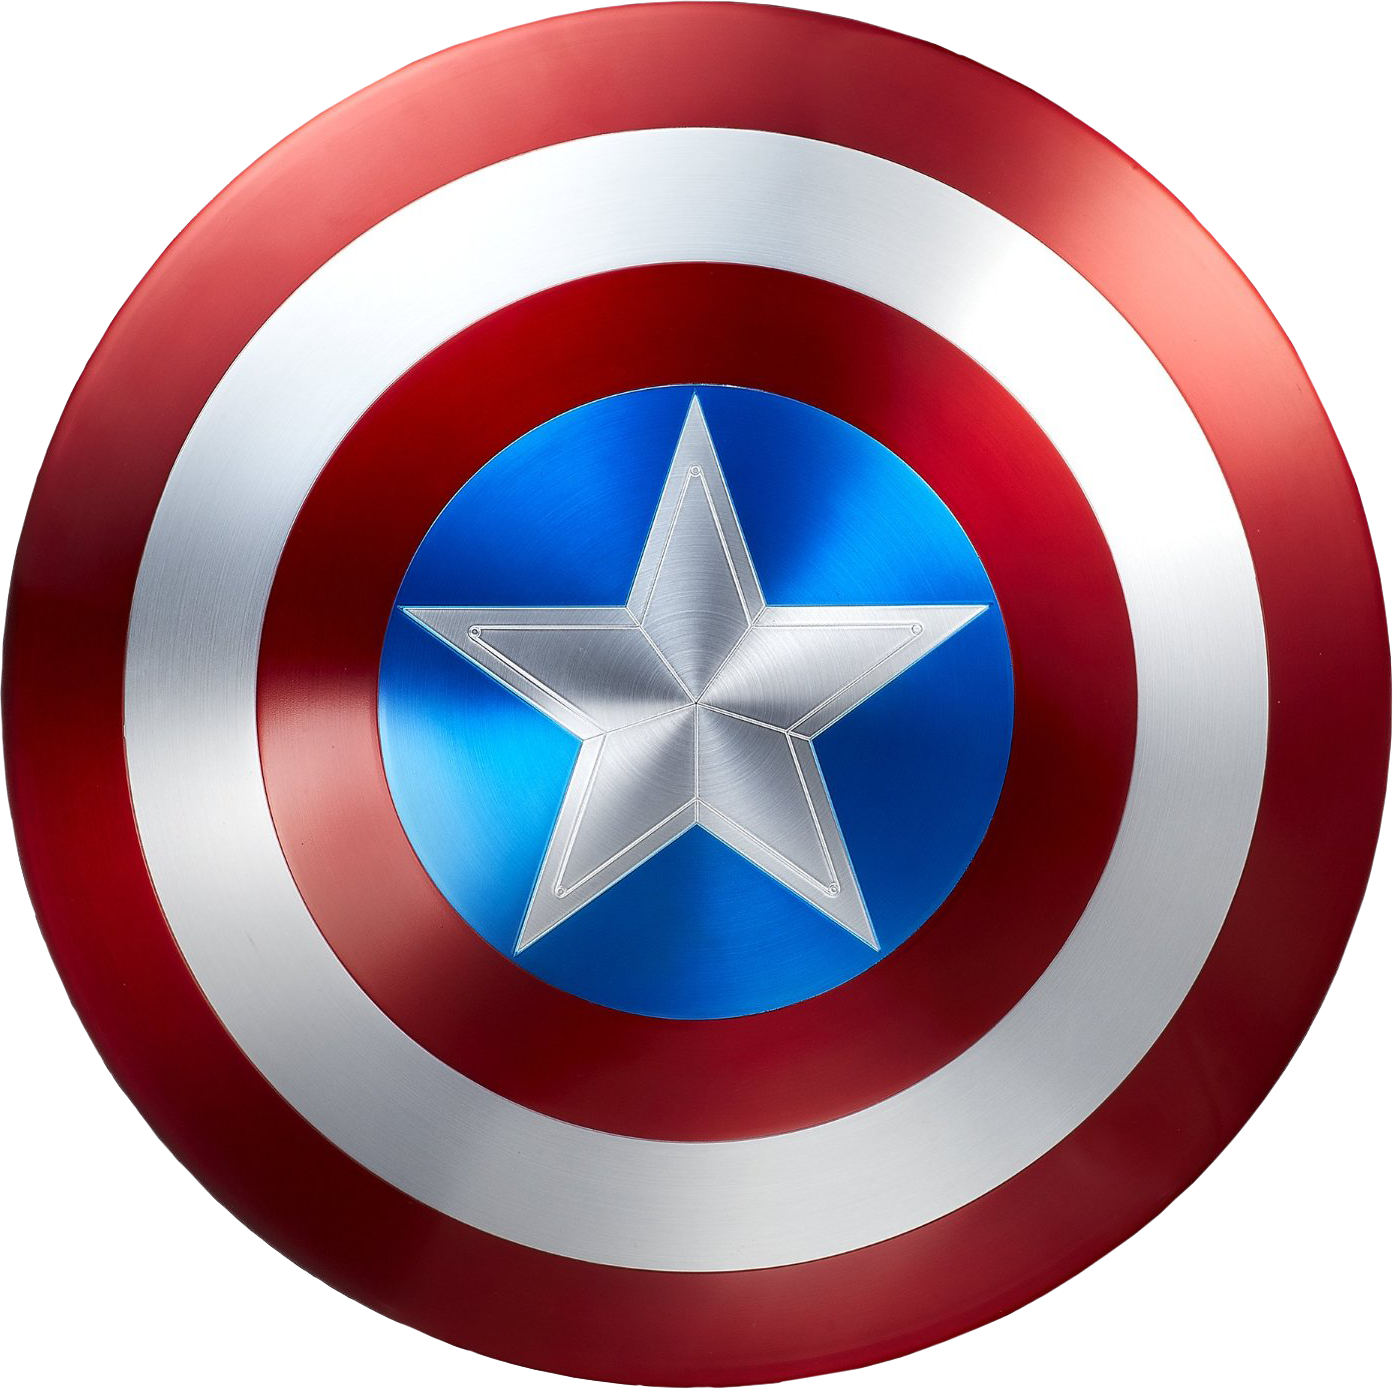 Captin America Shield - Captain America Shield Metal (1393x1389)